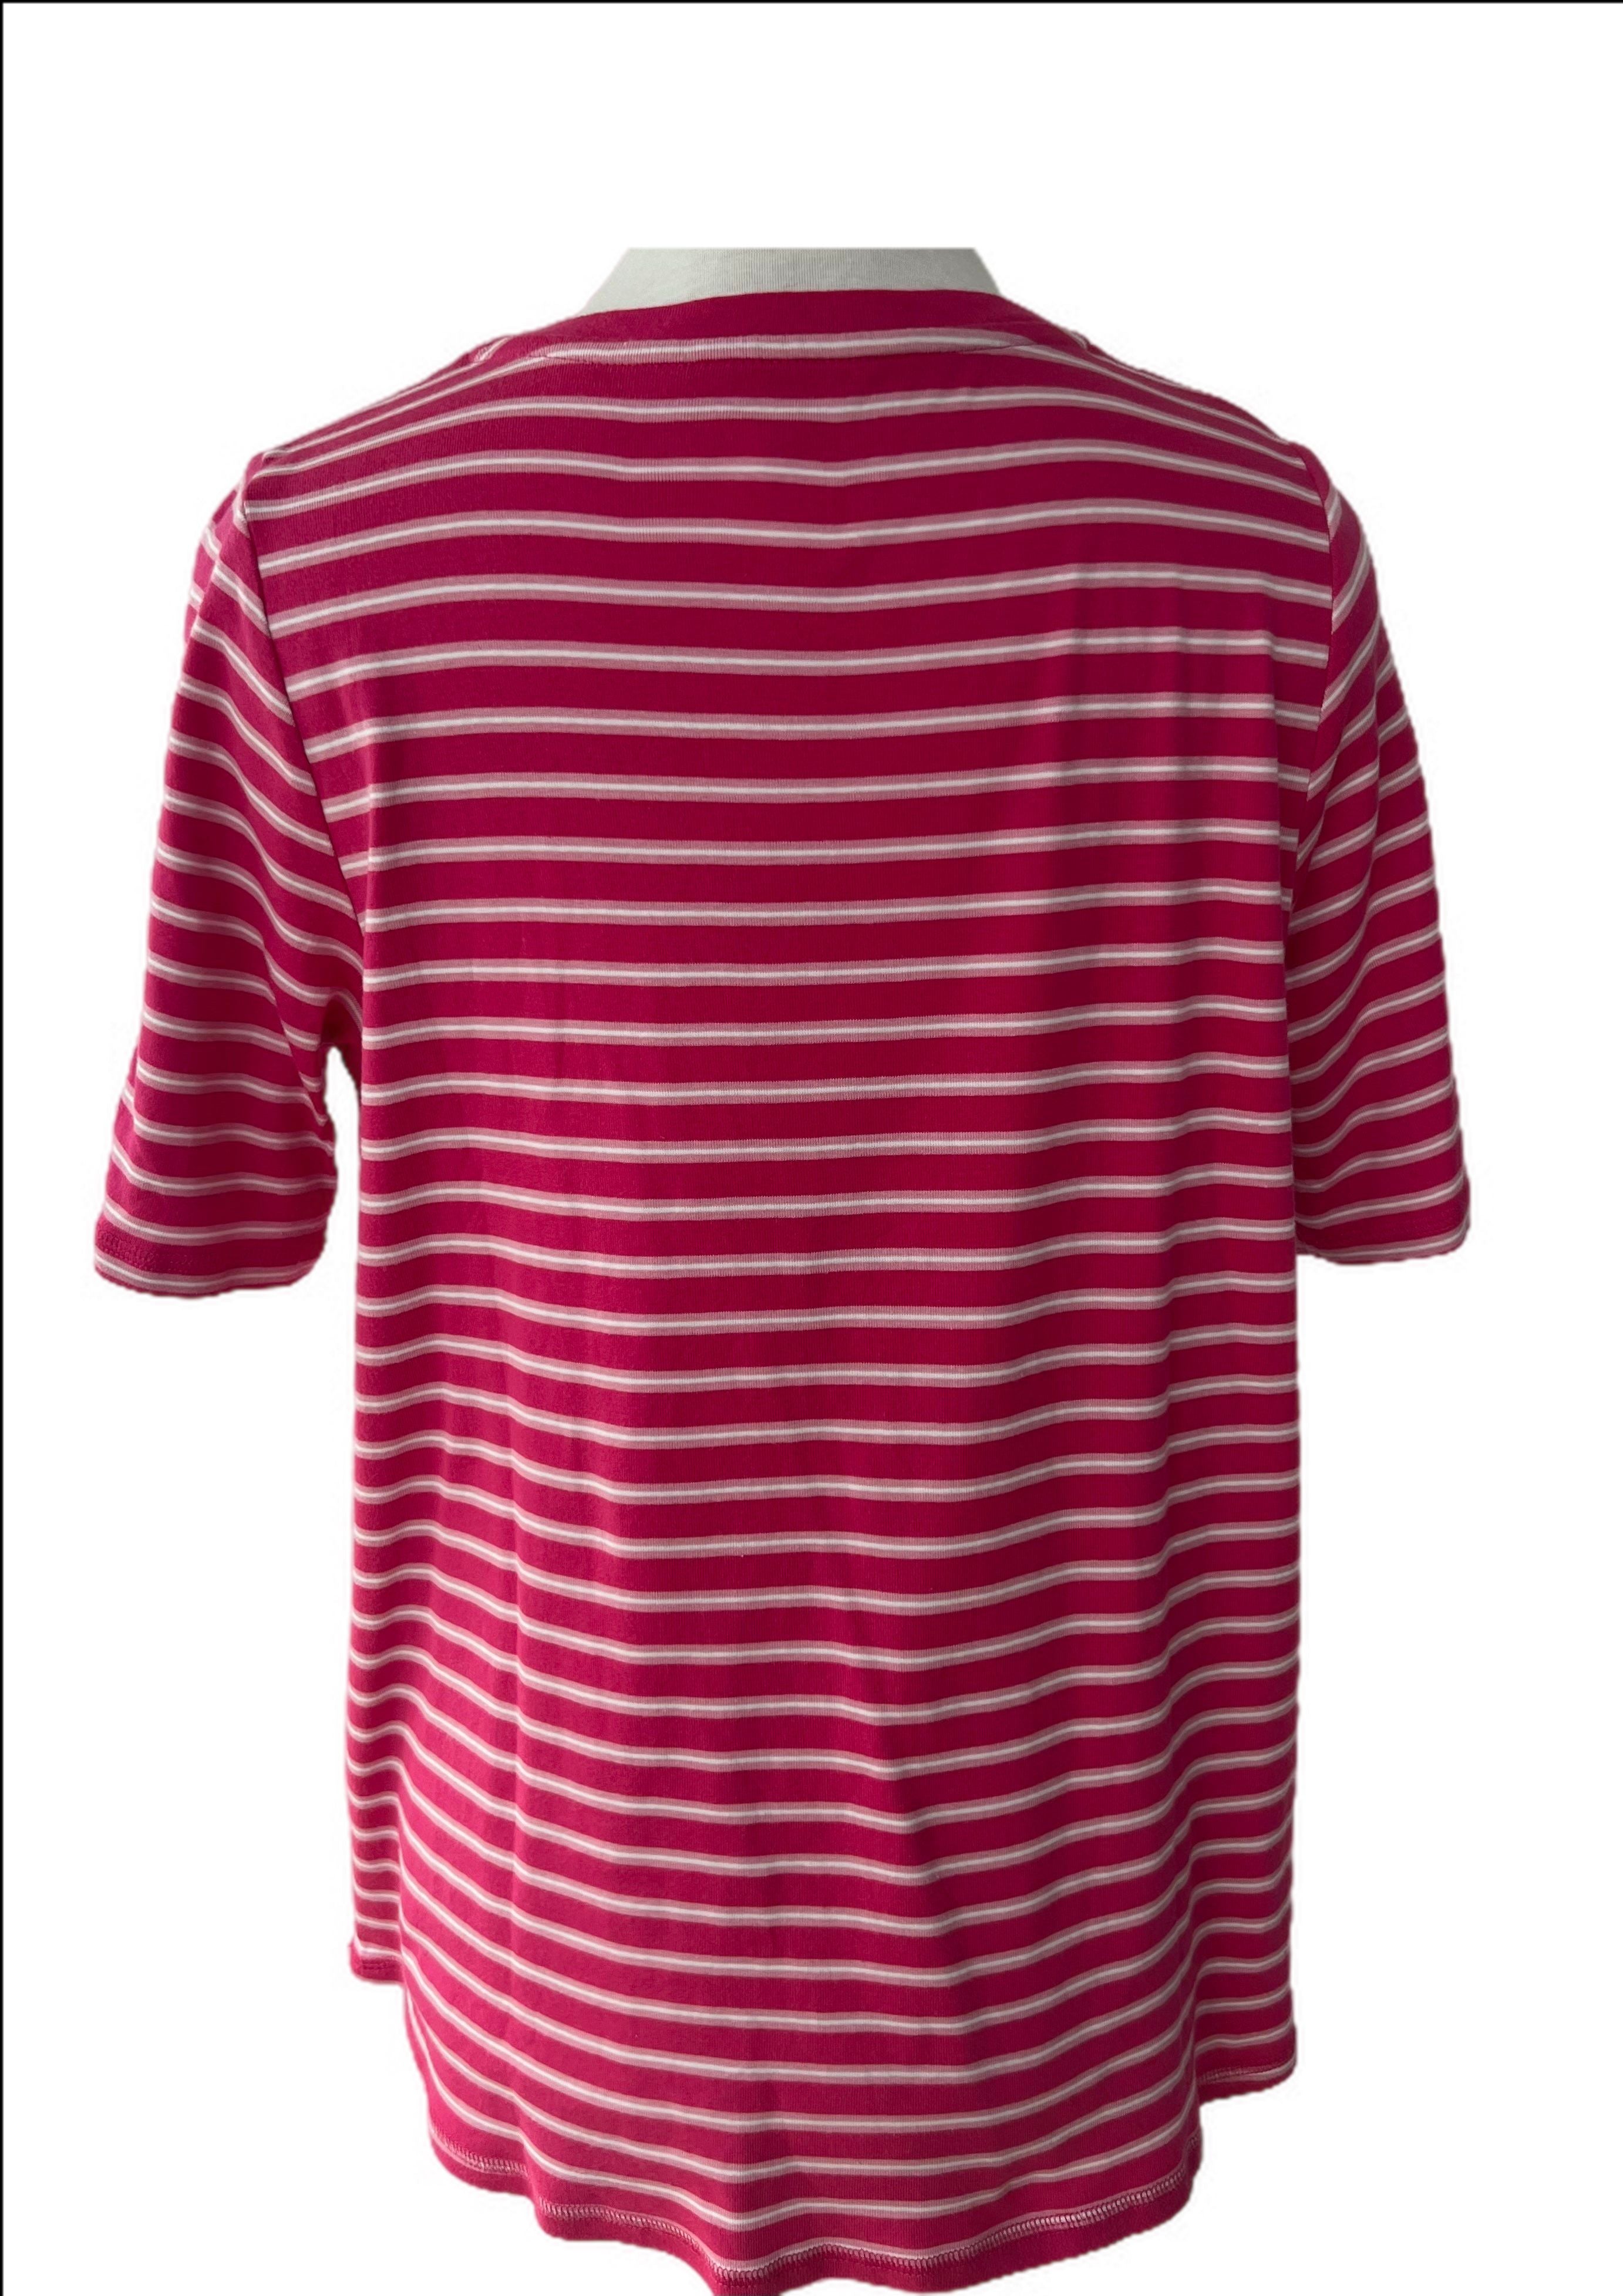 Striped tee shirt